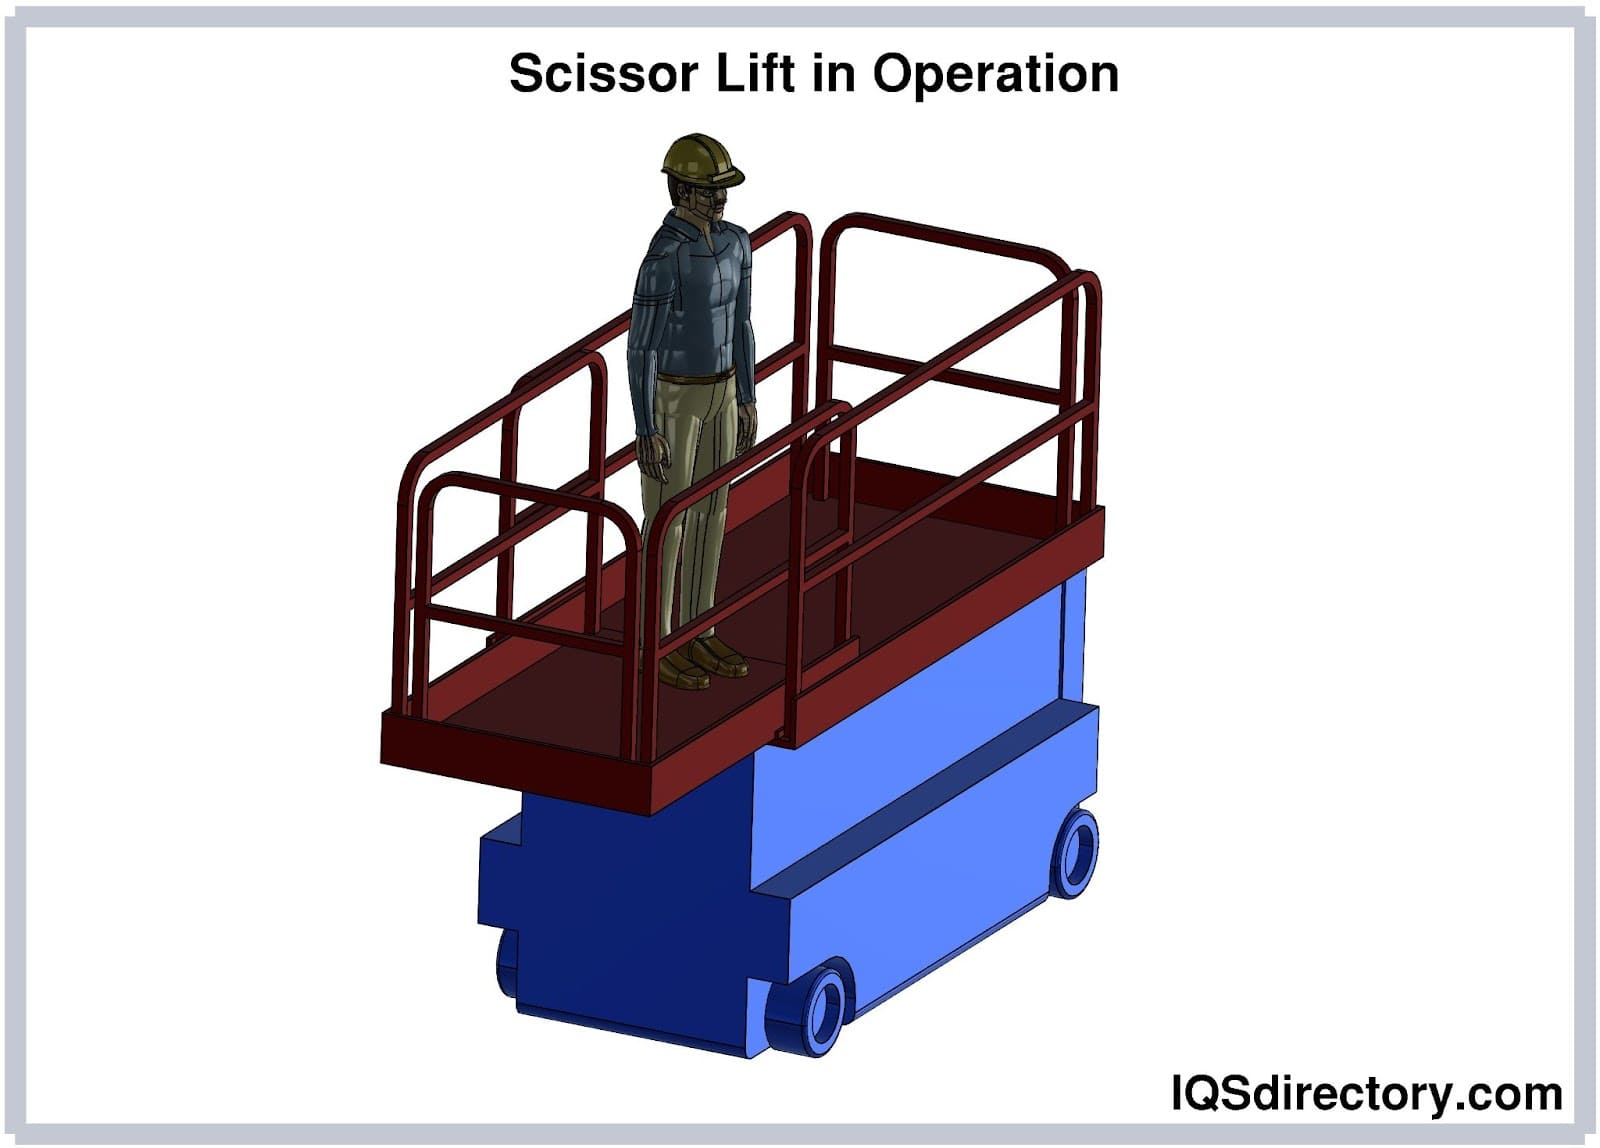 Scissor Lift in Operation